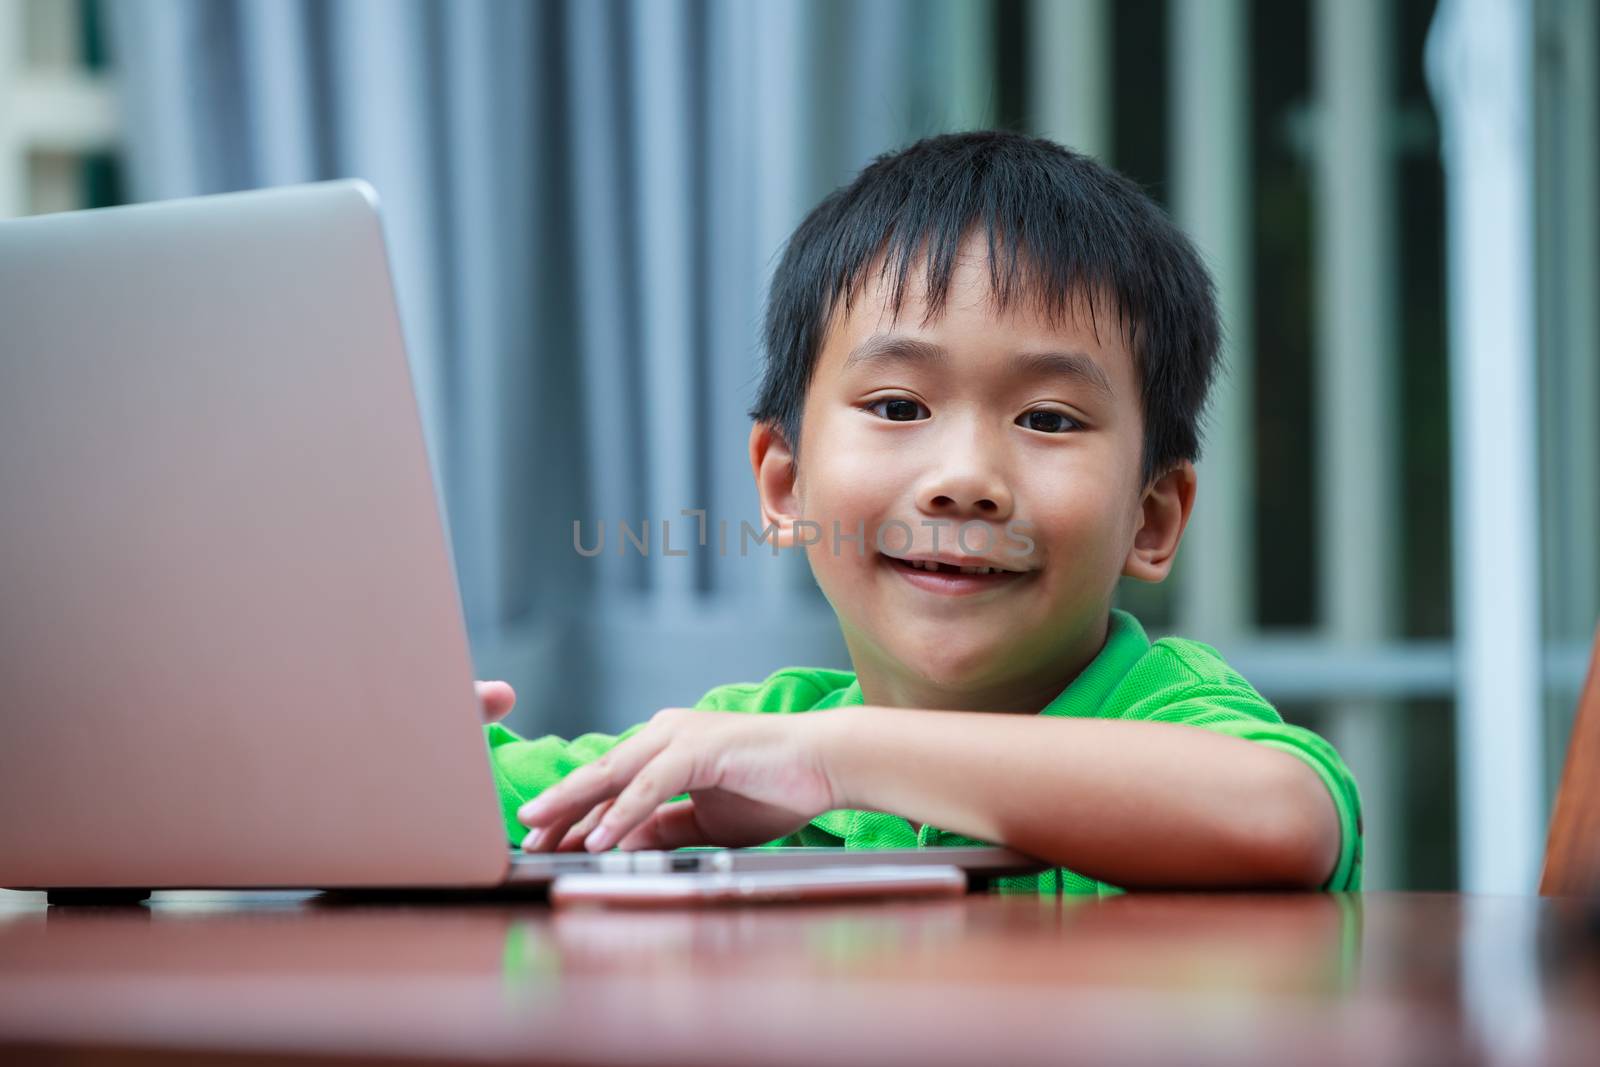 Asian boy enjoying modern generation technologies playing indoor by kdshutterman